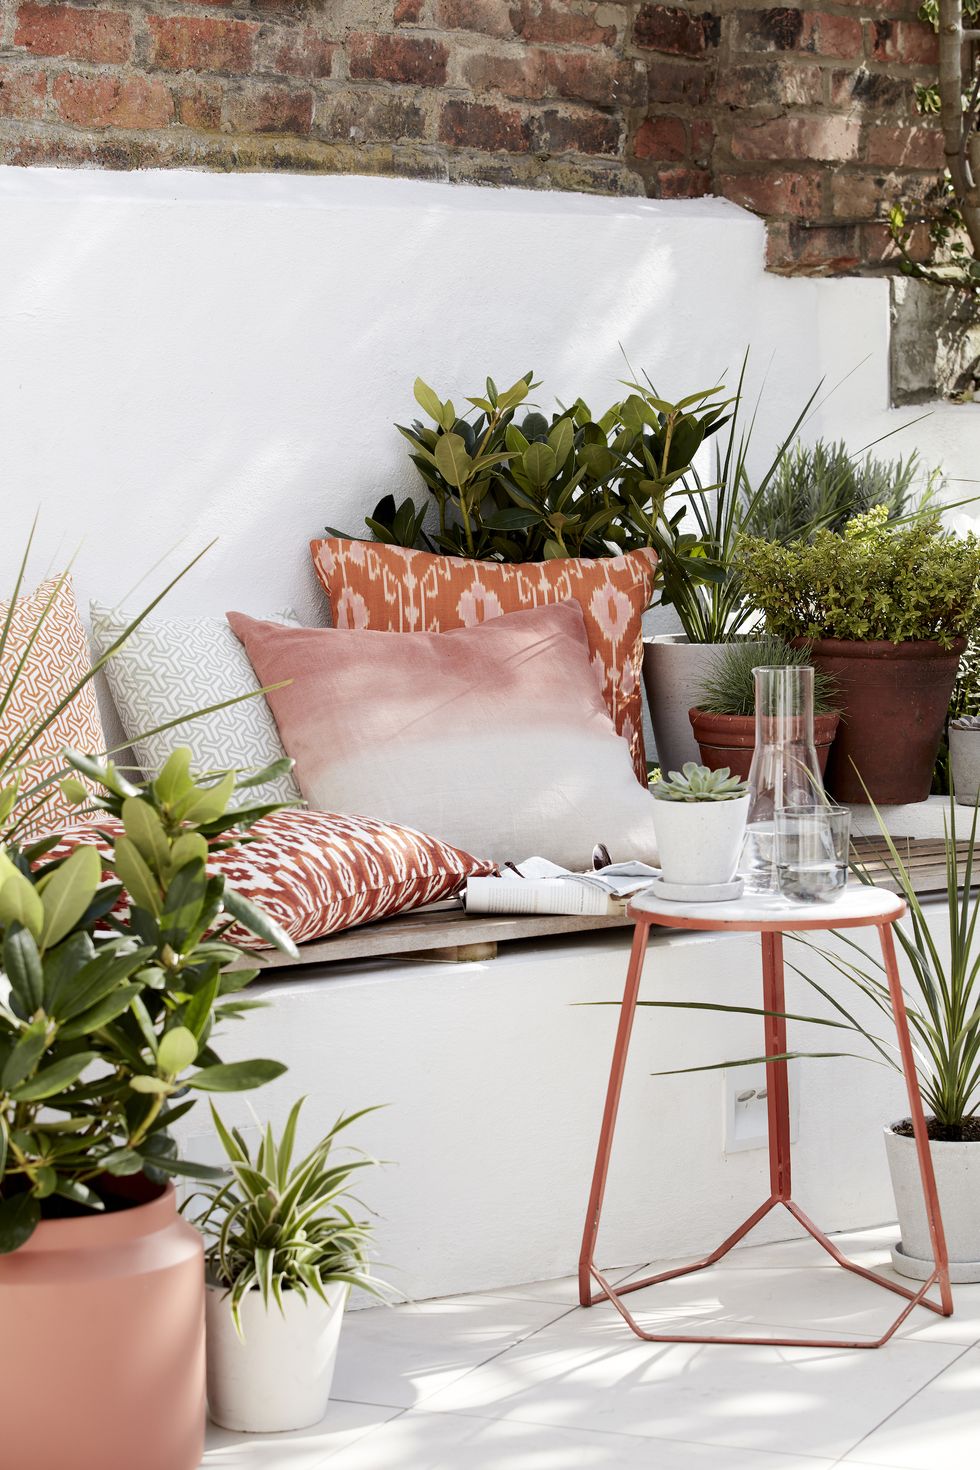 16 Garden Design Ideas For Your Outdoor Space - Best Garden Ideas